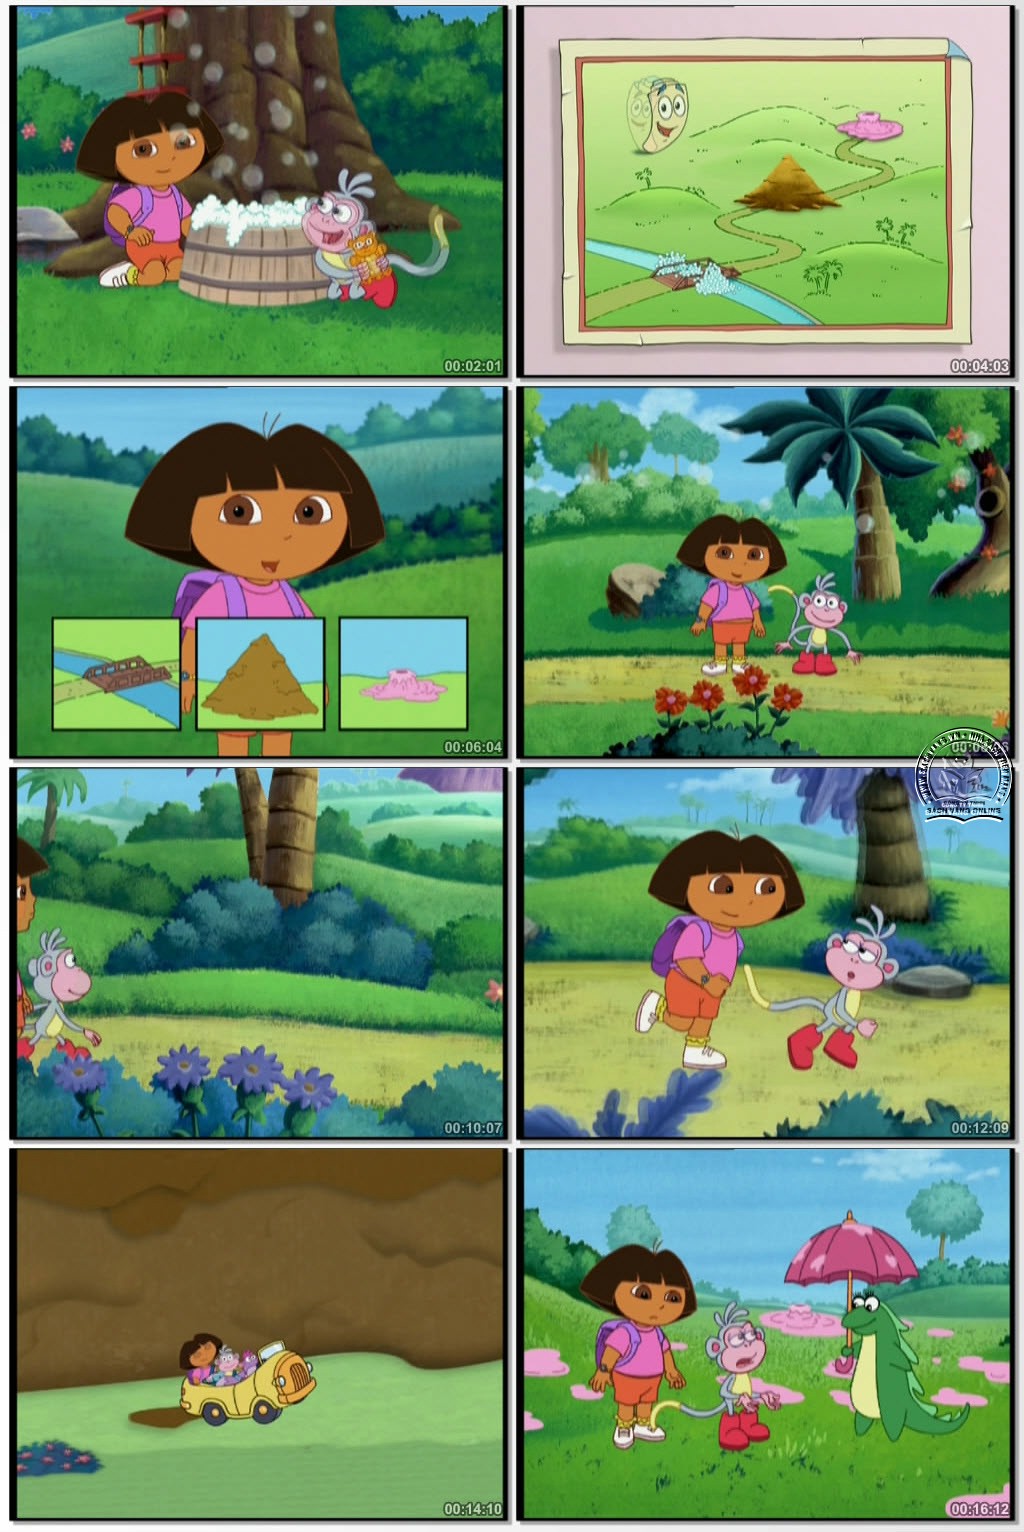 Dora the explorer reversed